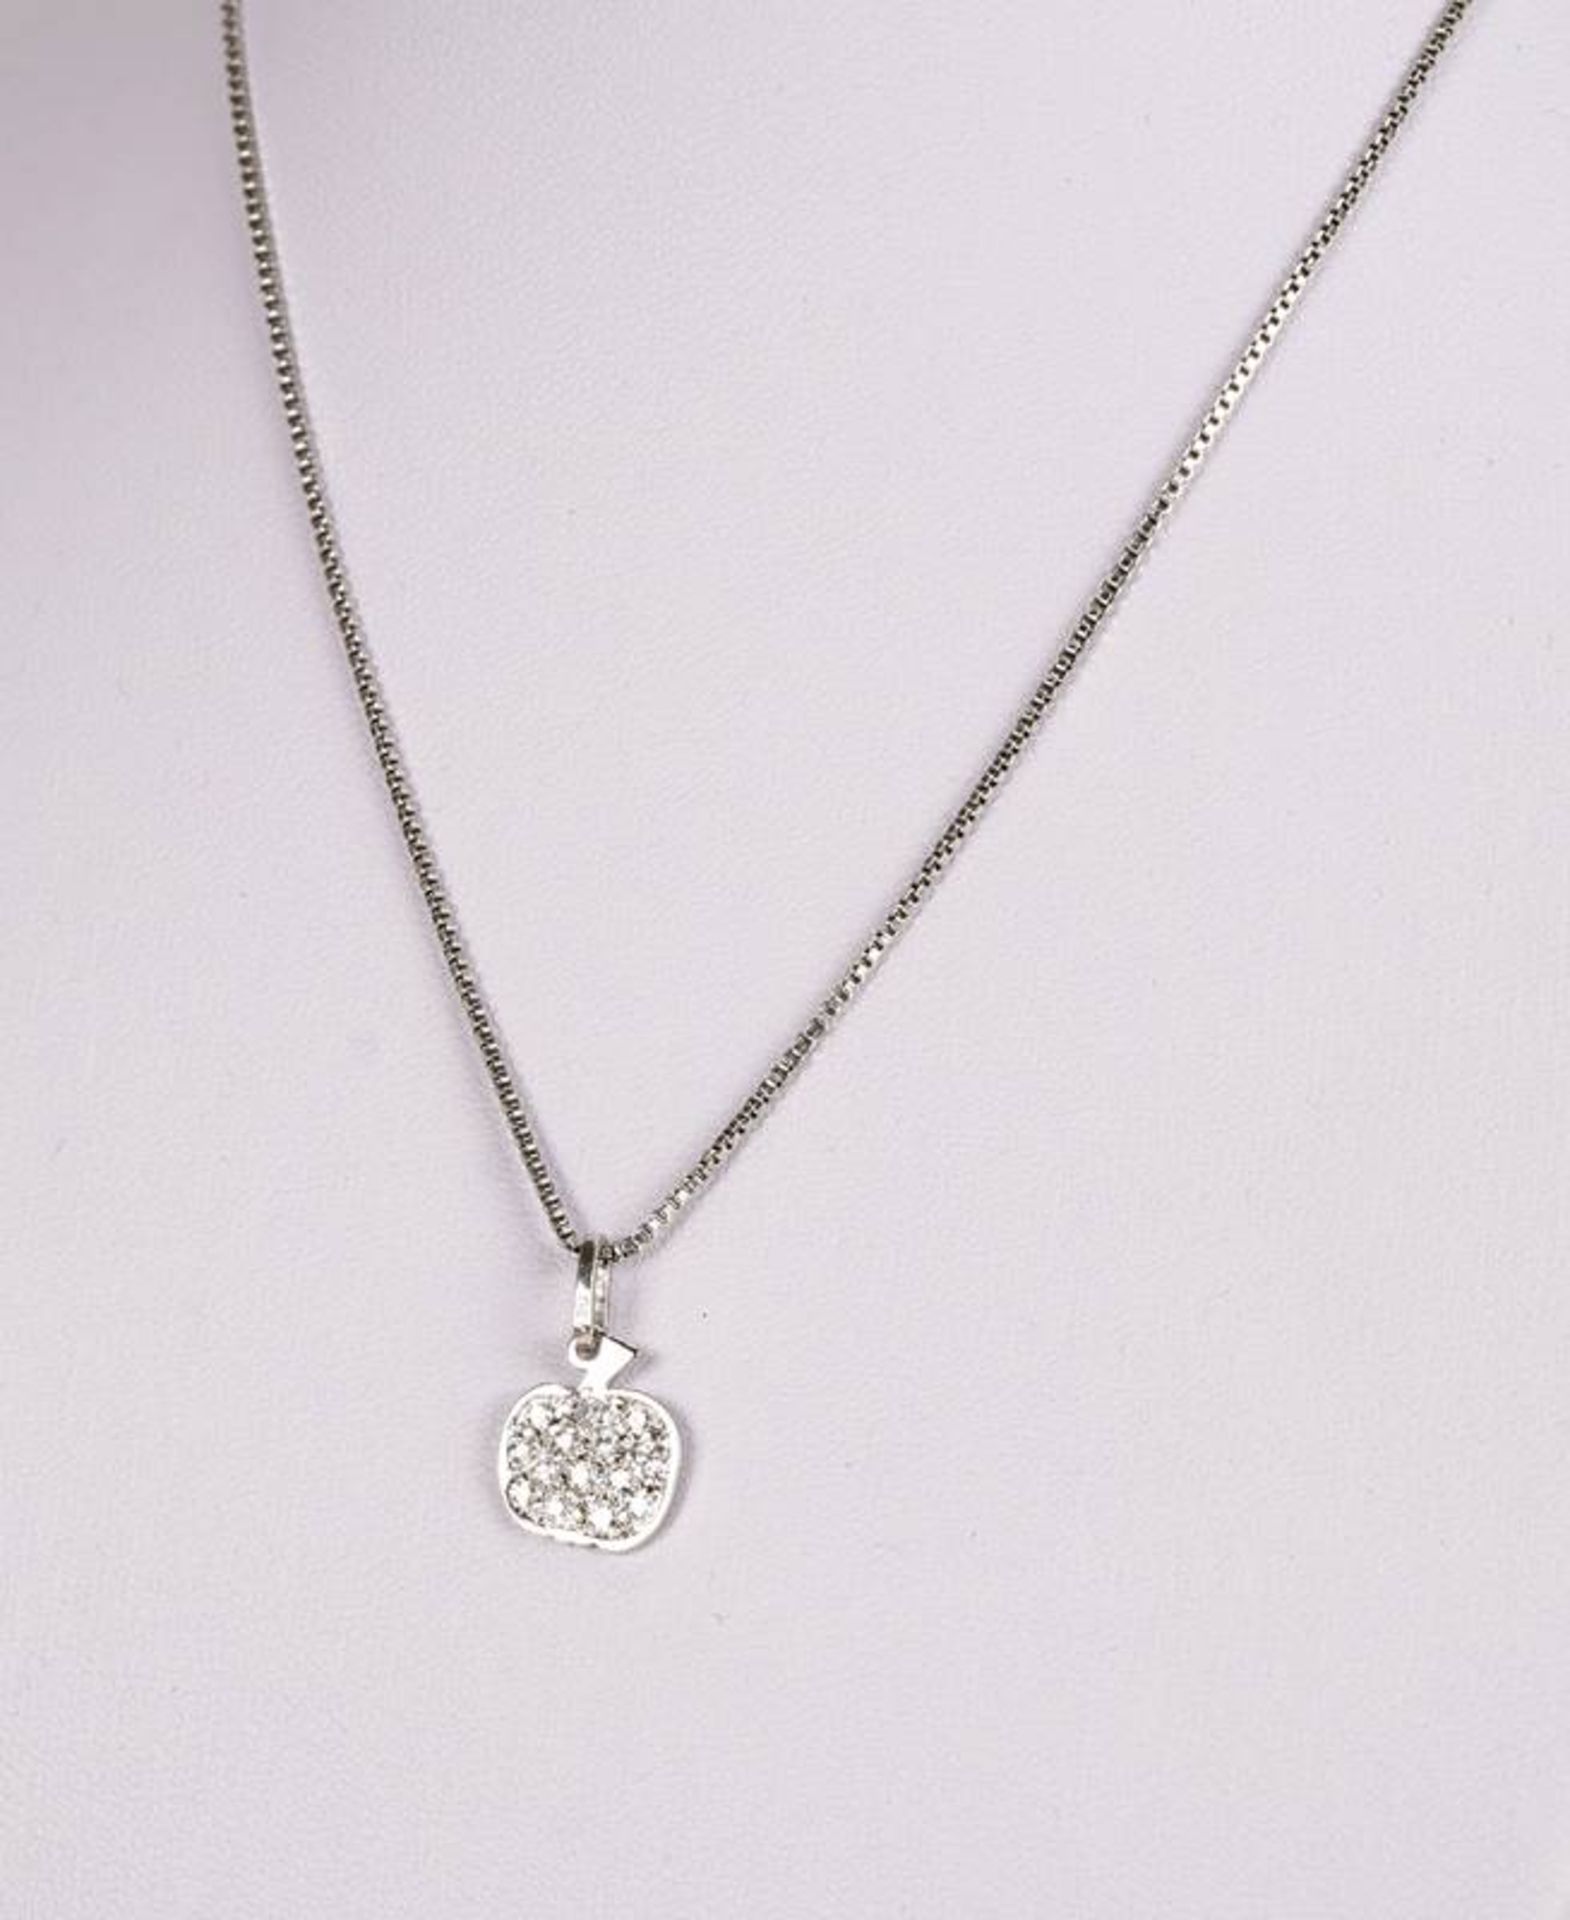 Diamond pendant - Image 2 of 2